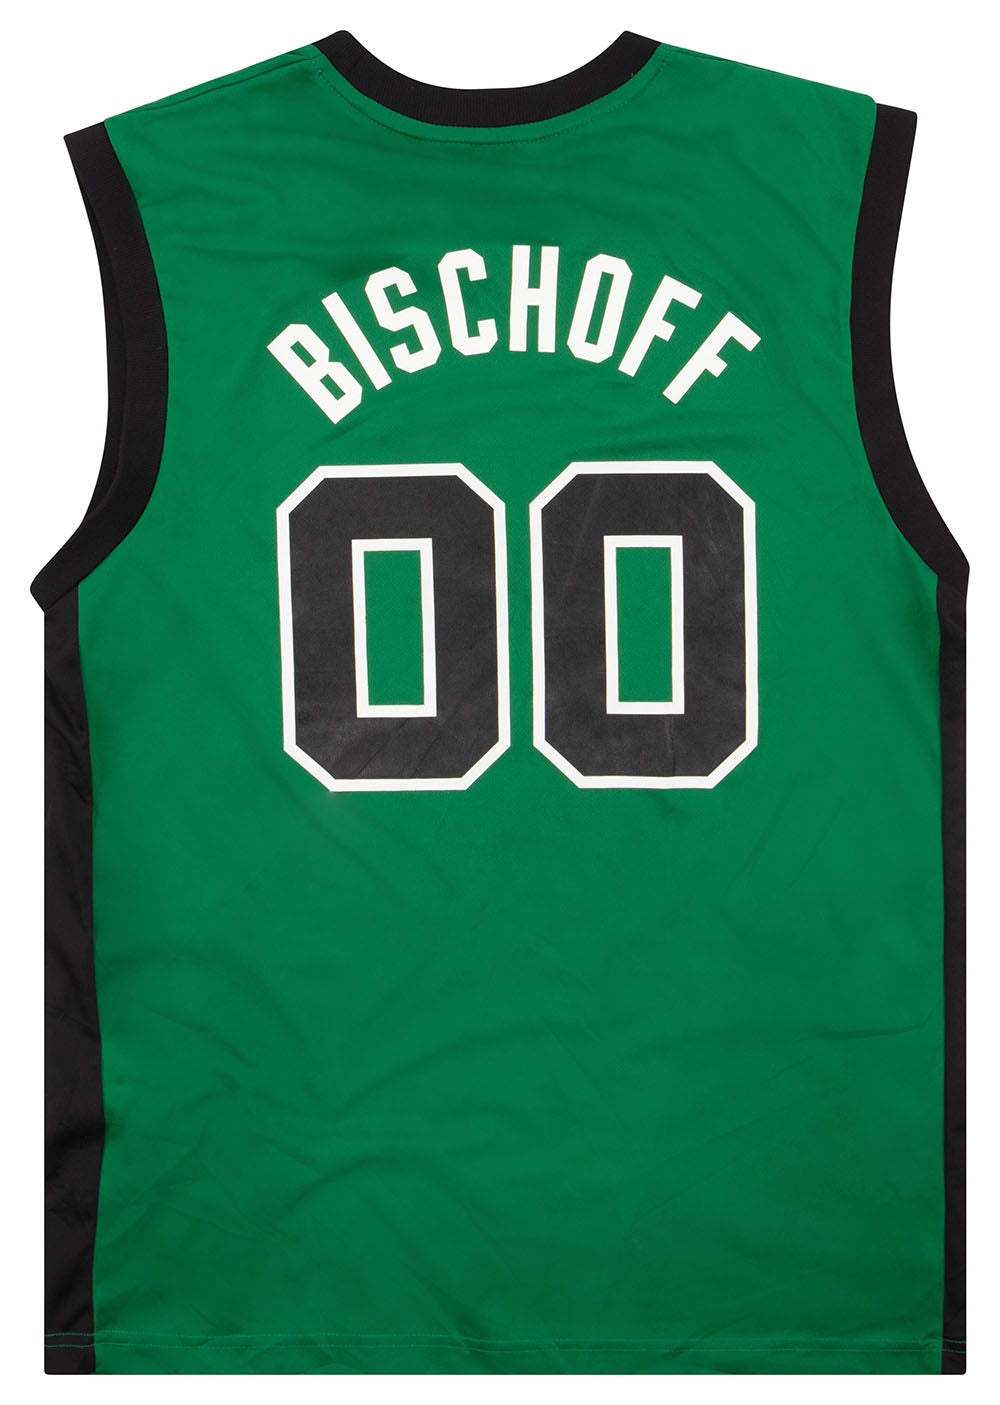 2010-11 Shaquille O'Neal Game Worn Boston Celtics Jersey - NBA